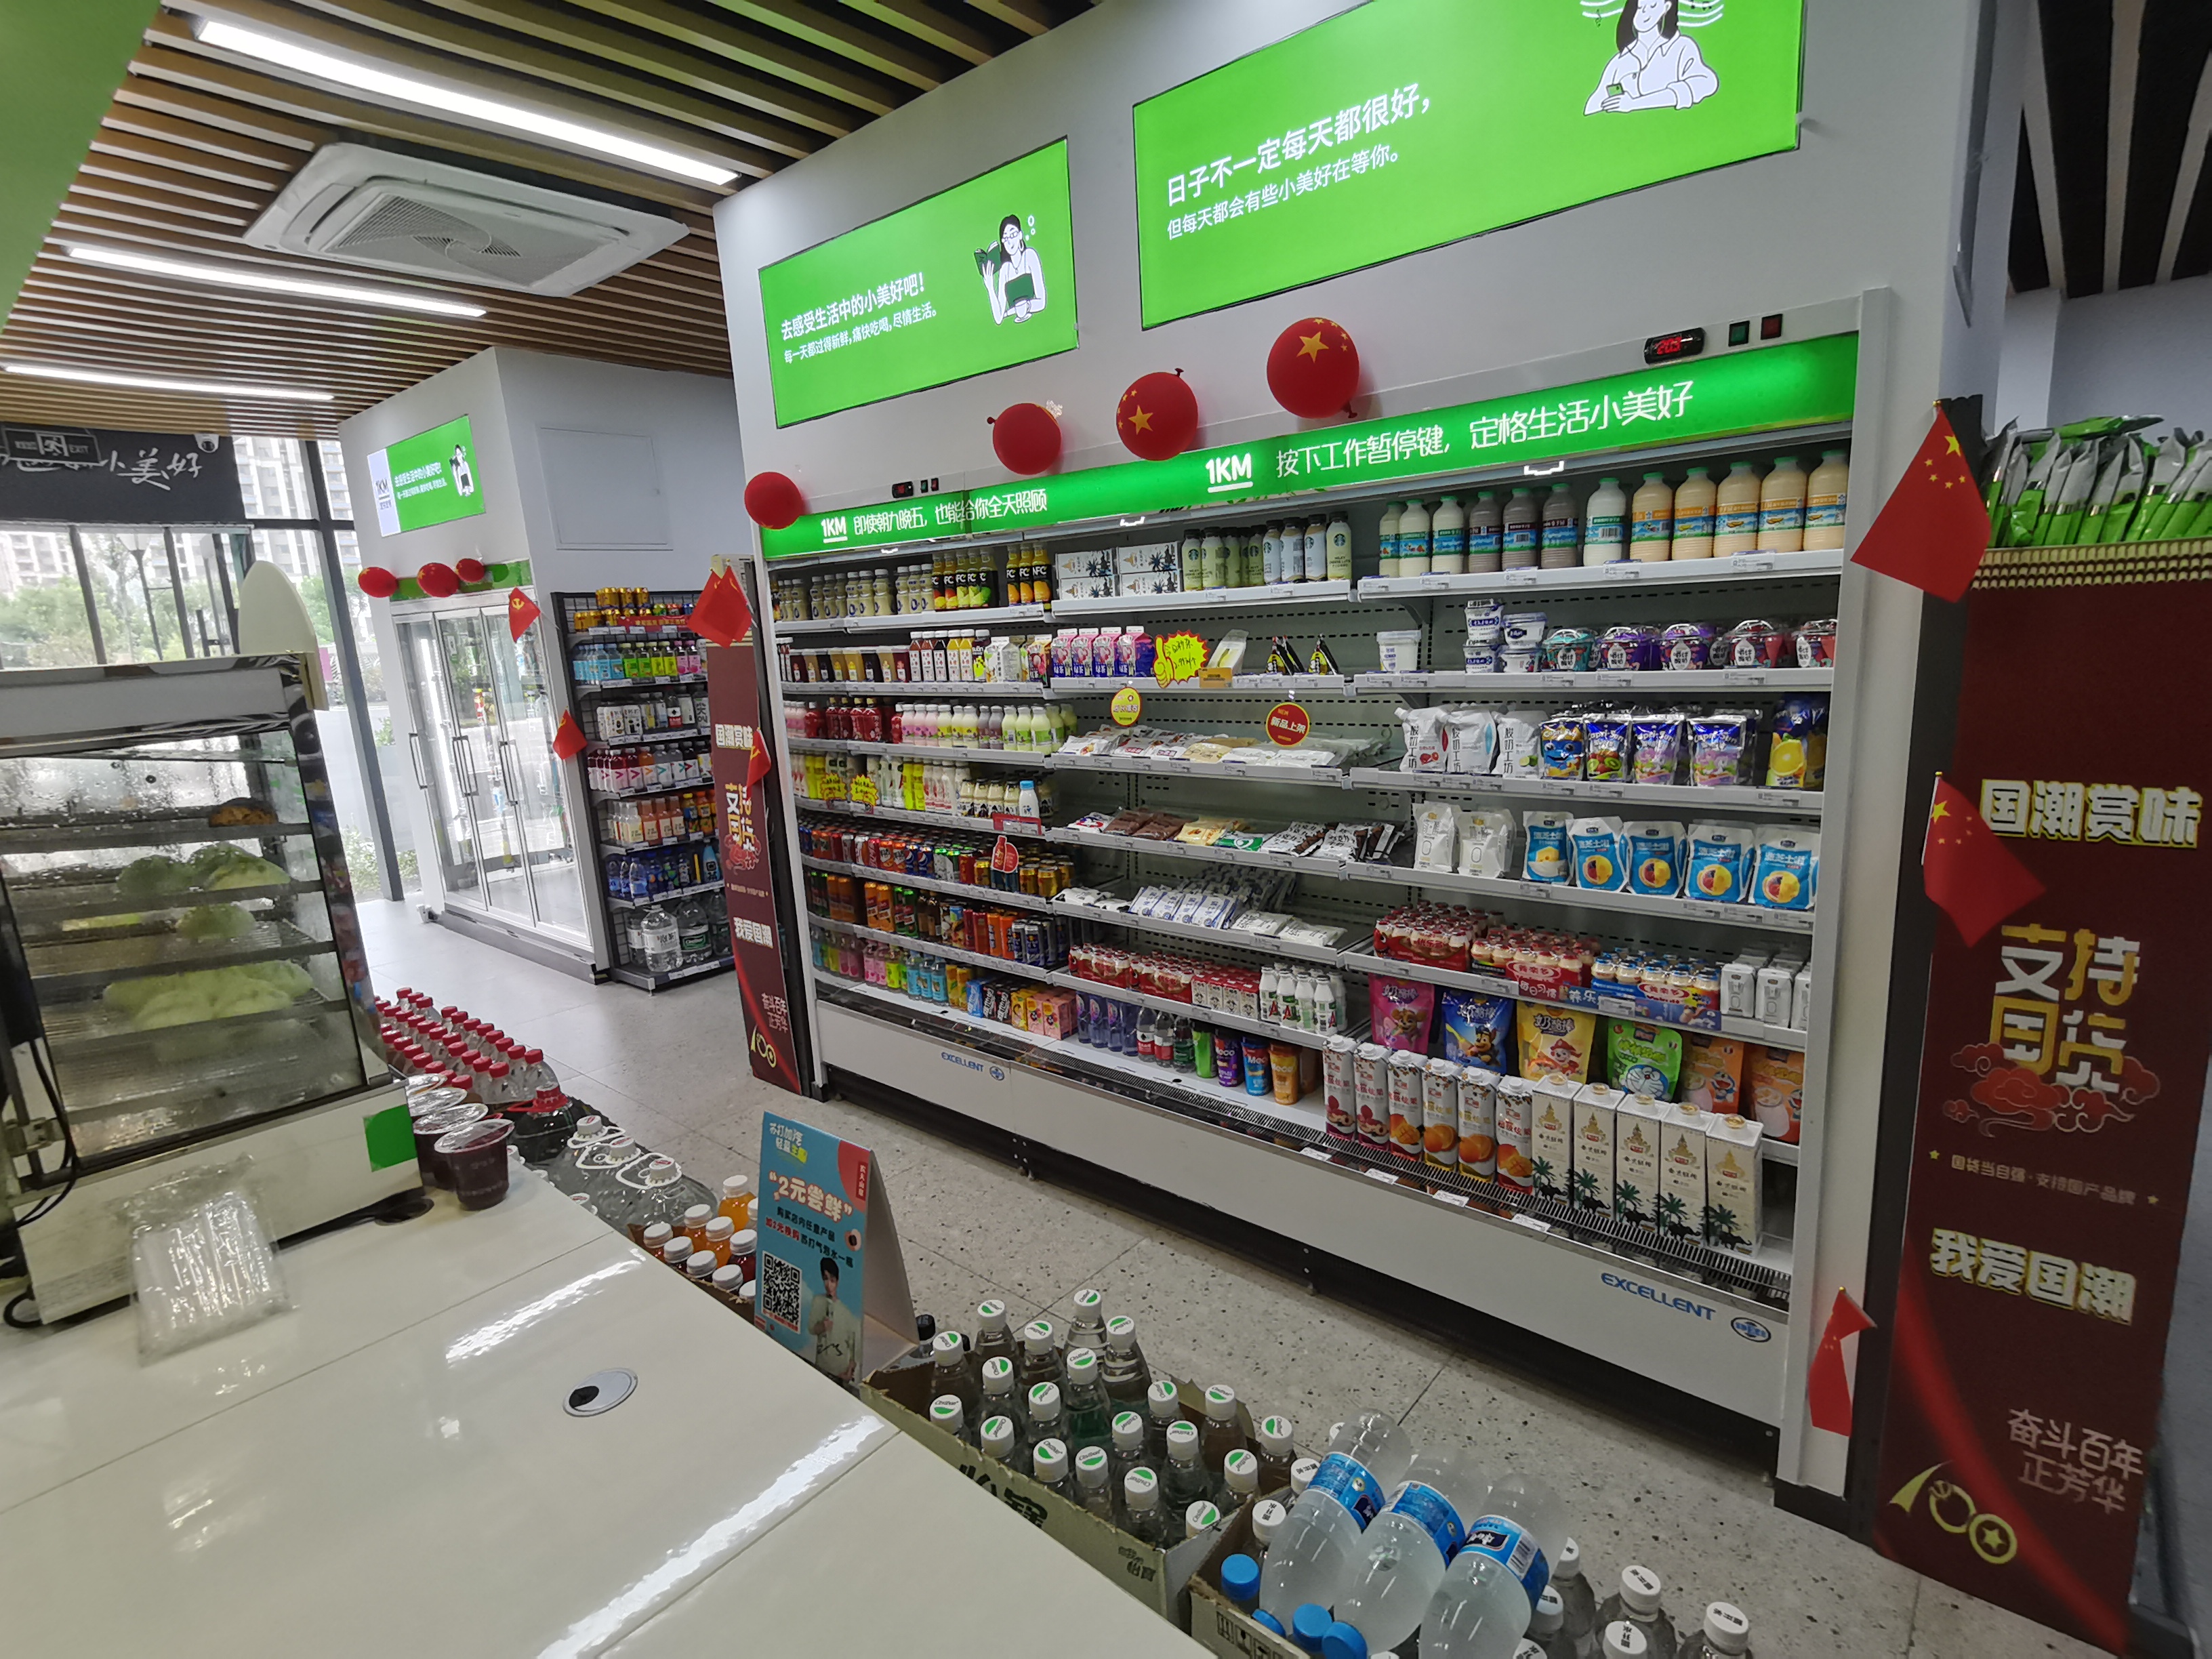 How should supermarkets choose refrigerators?